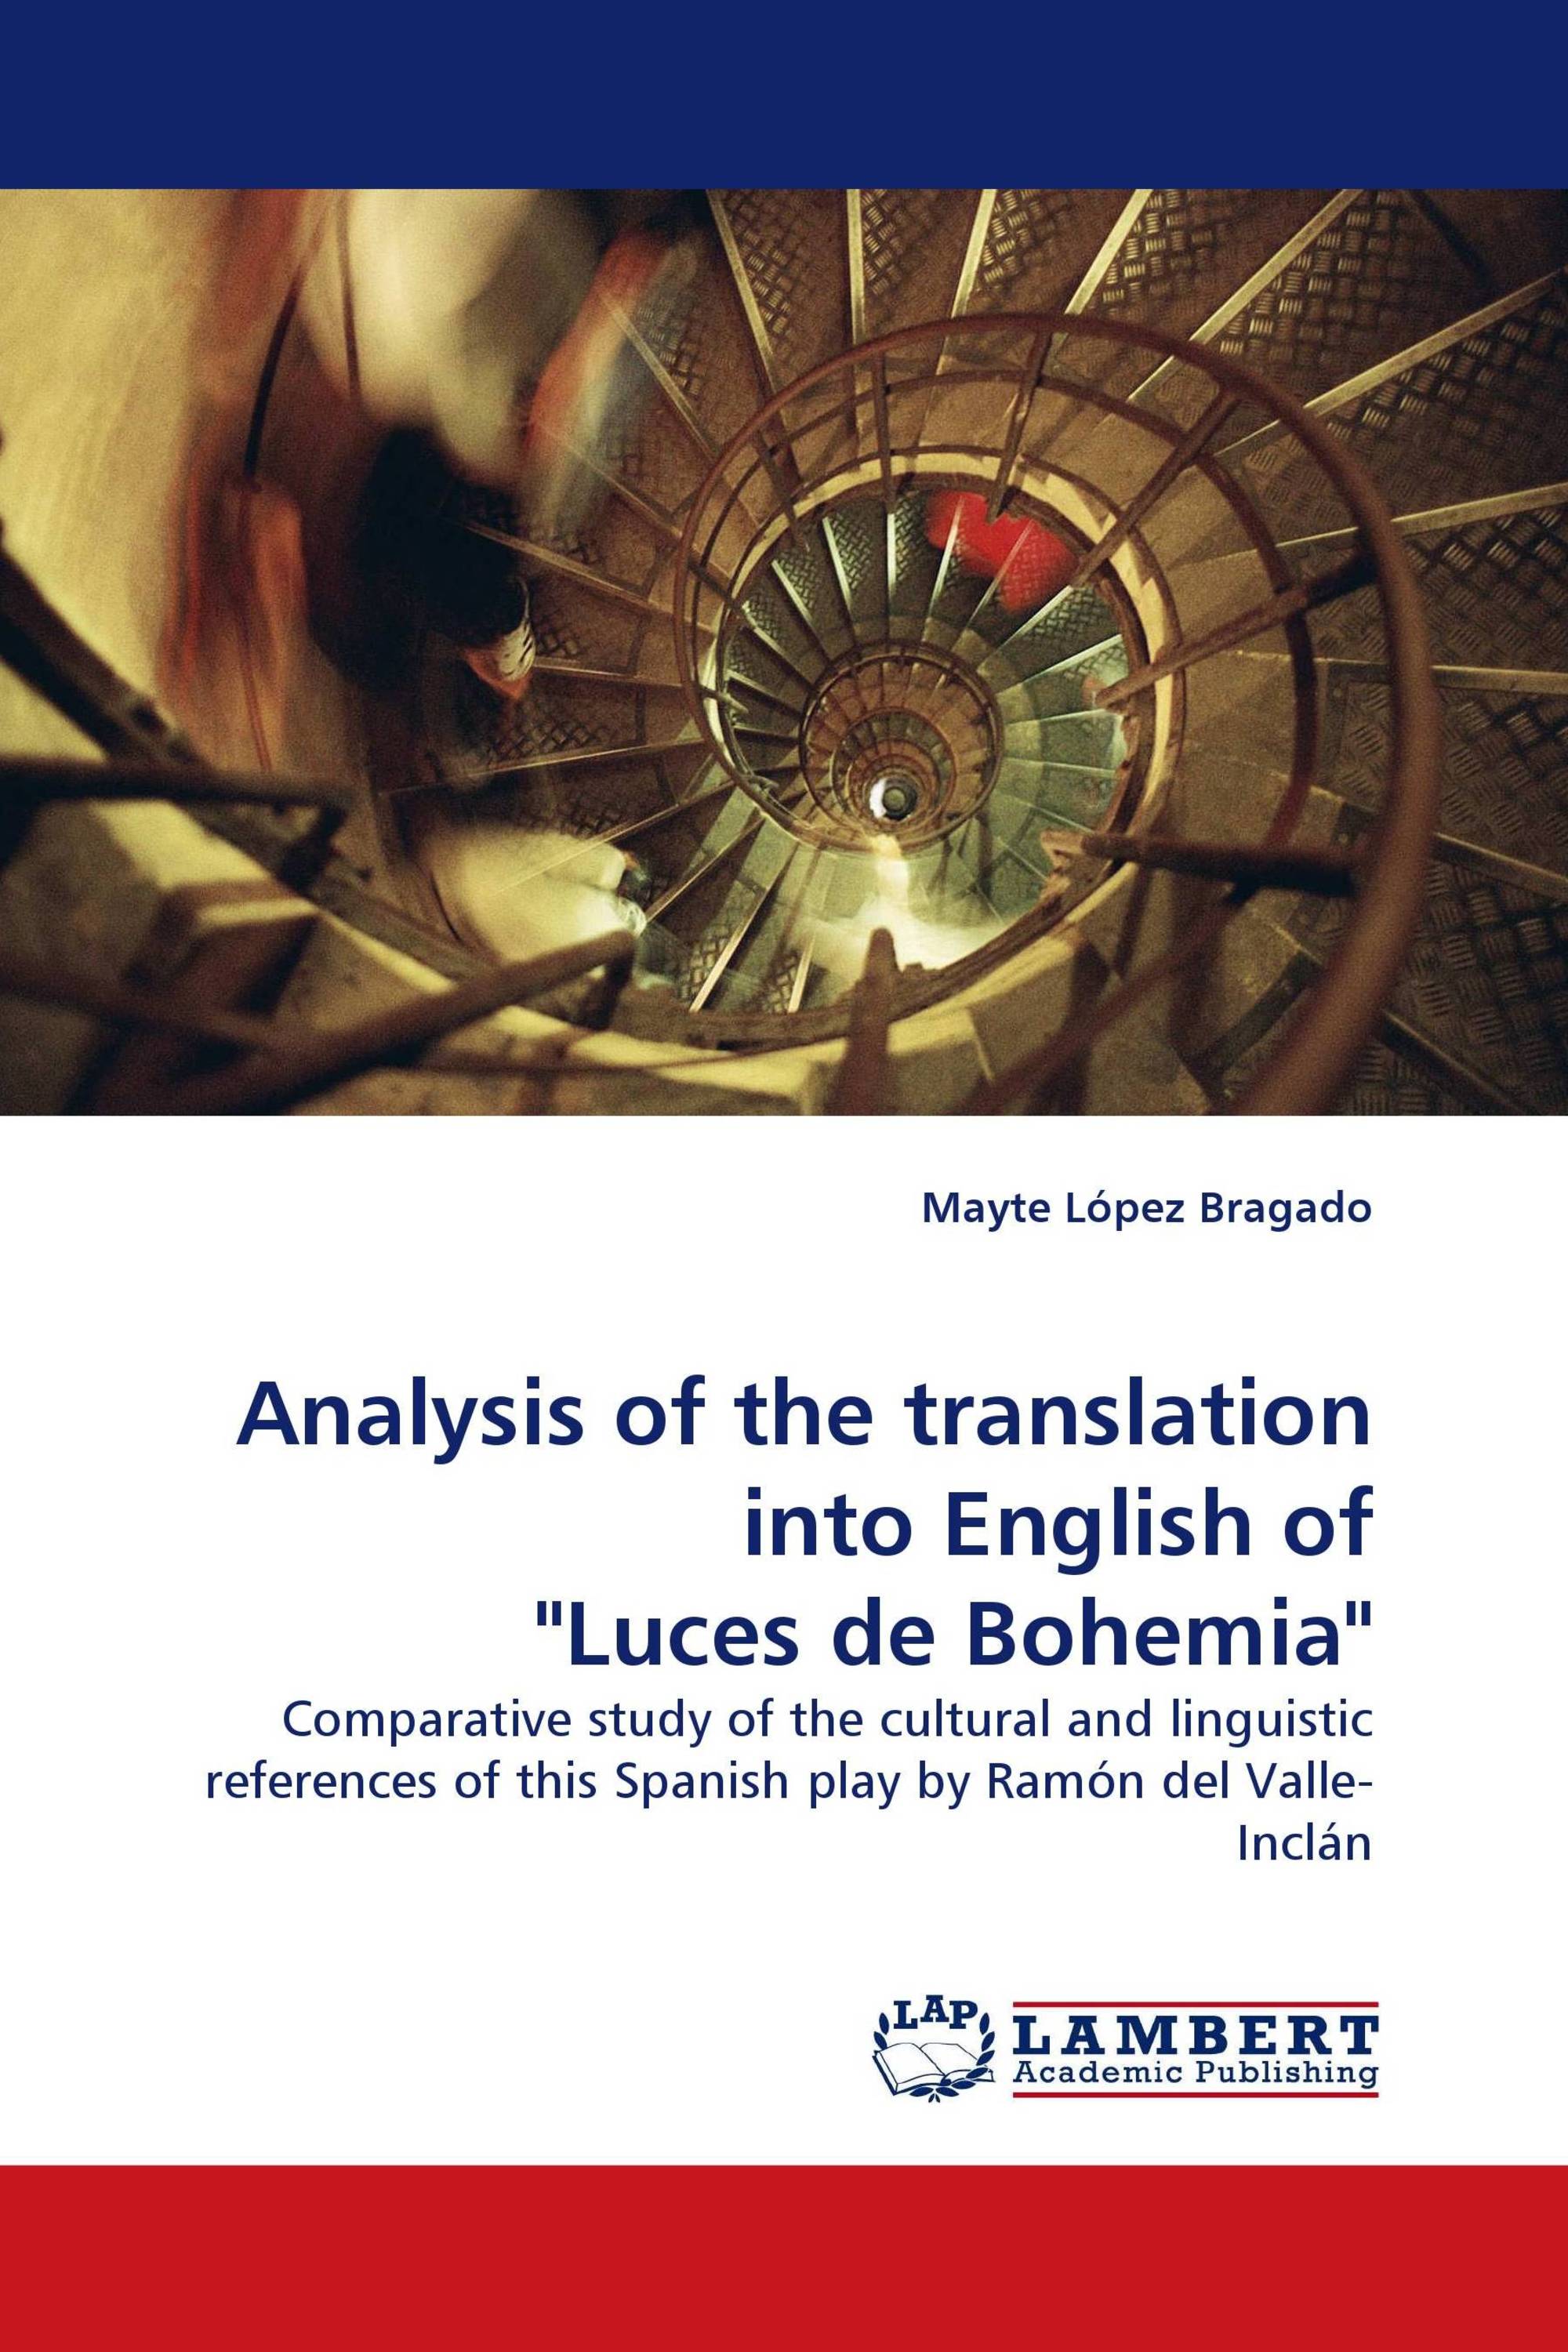 Analysis of the translation into English of "Luces de Bohemia"